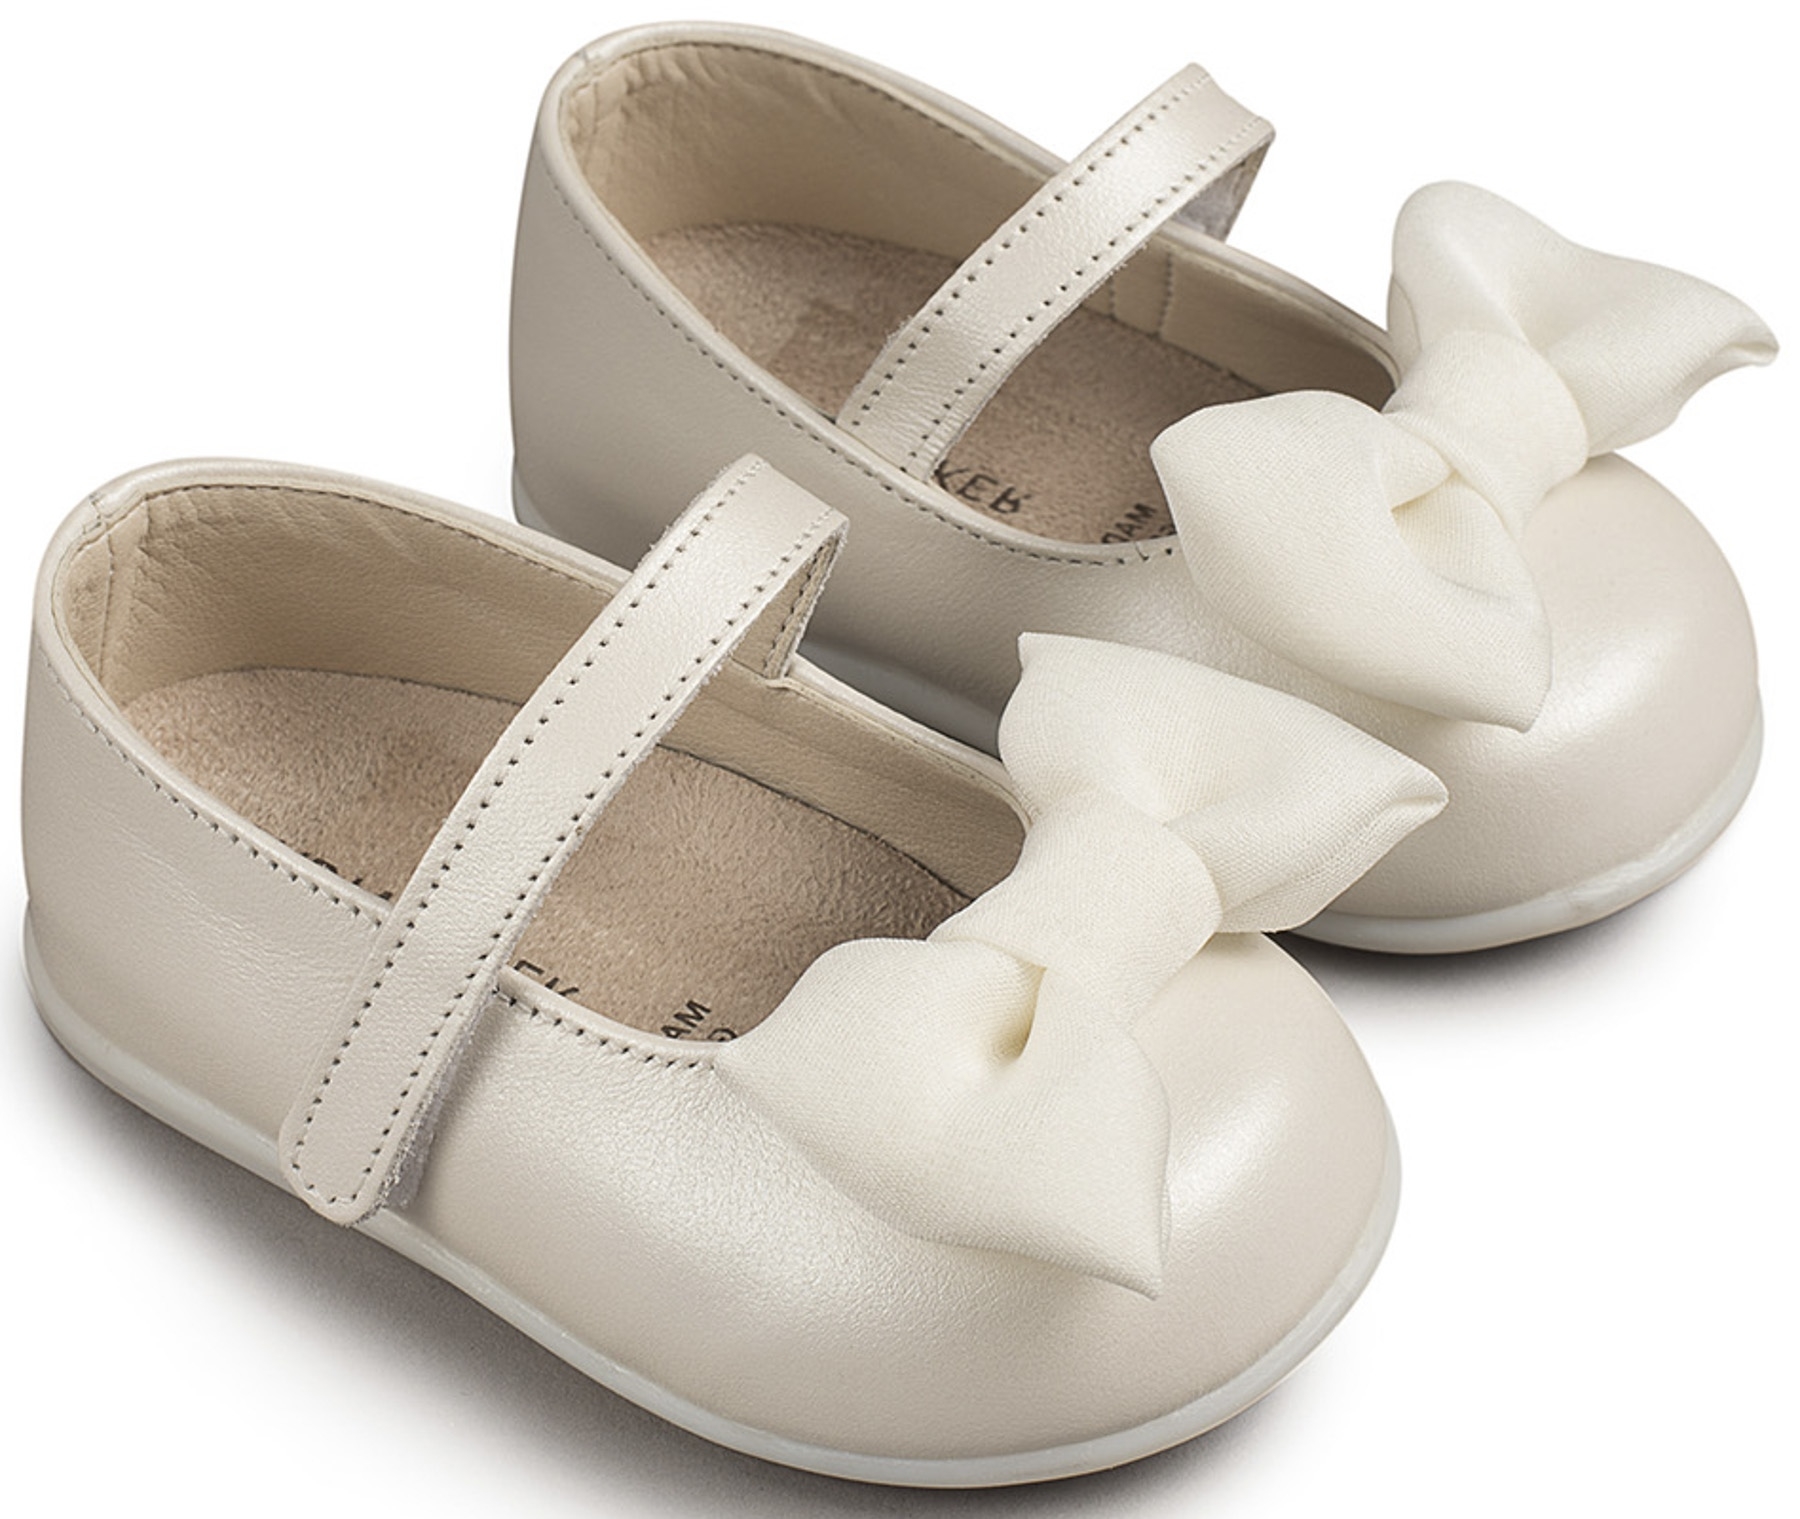 Babywalker μπαλαρίνα με φιόγκο Εκρού - Βαπτιστικά παπούτσια για κορίτσι